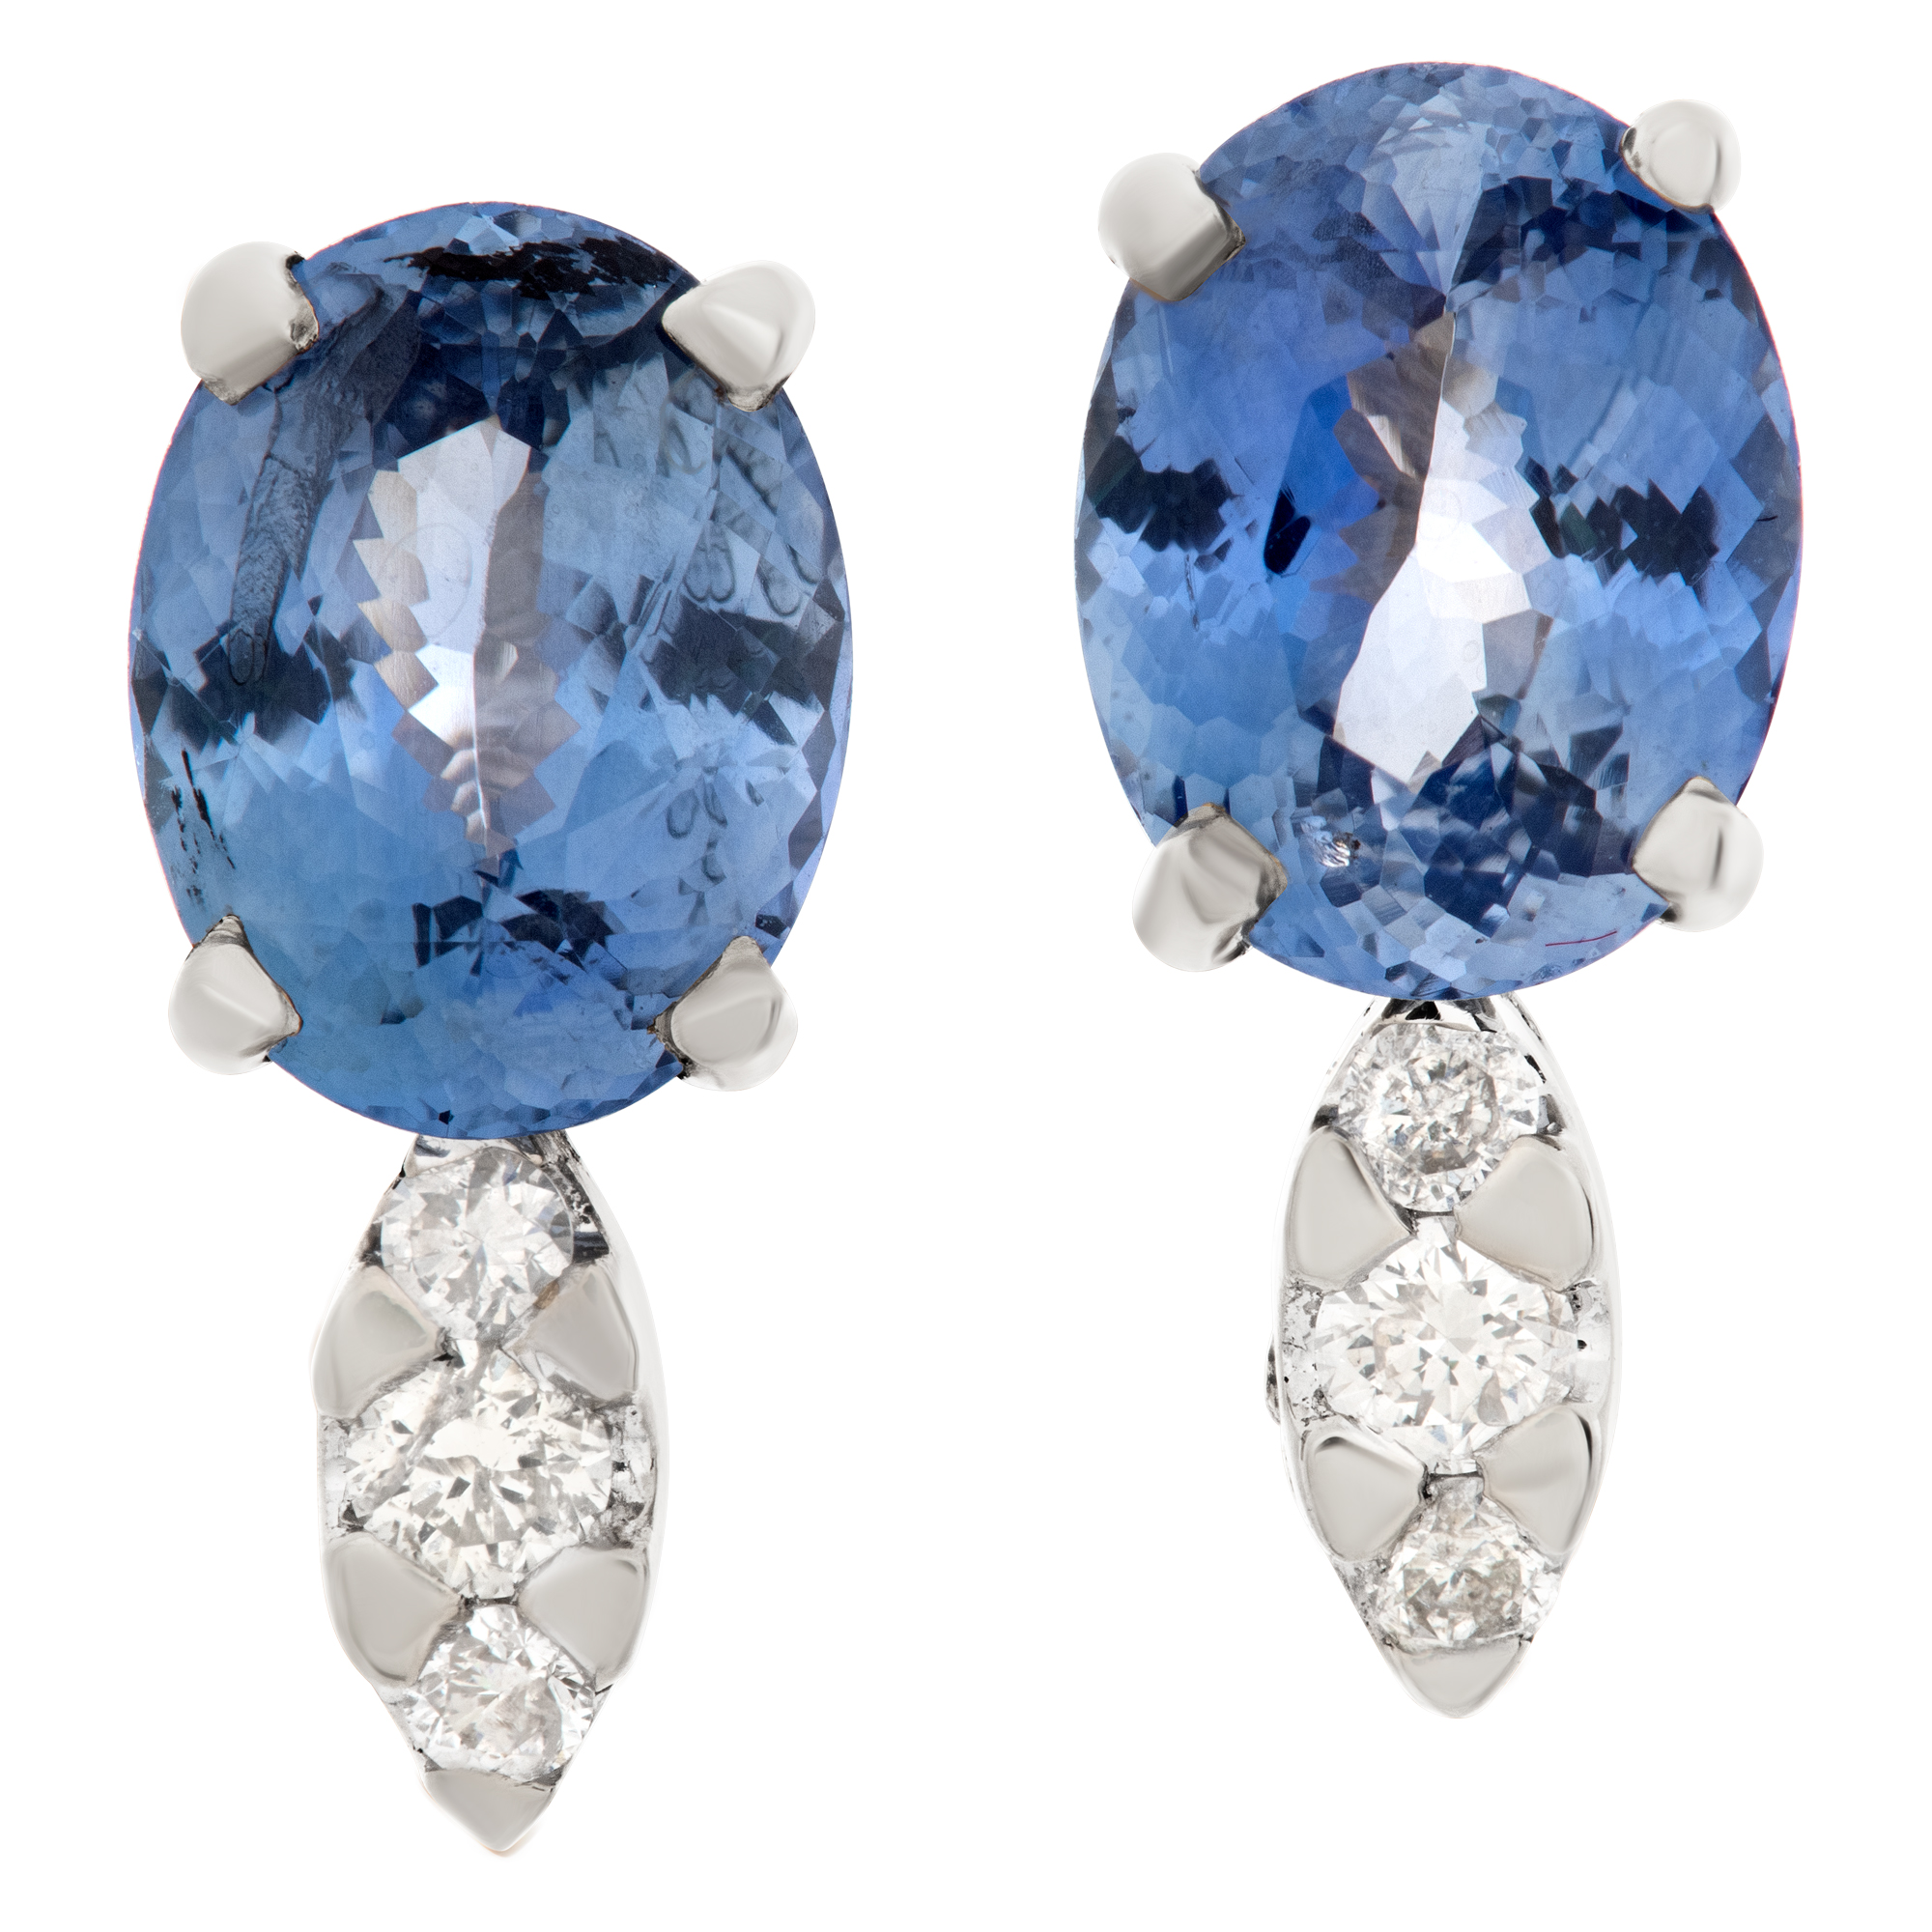 Oval brilliant cut tanzanite & diamonds stud earrings set in 14k white gold.